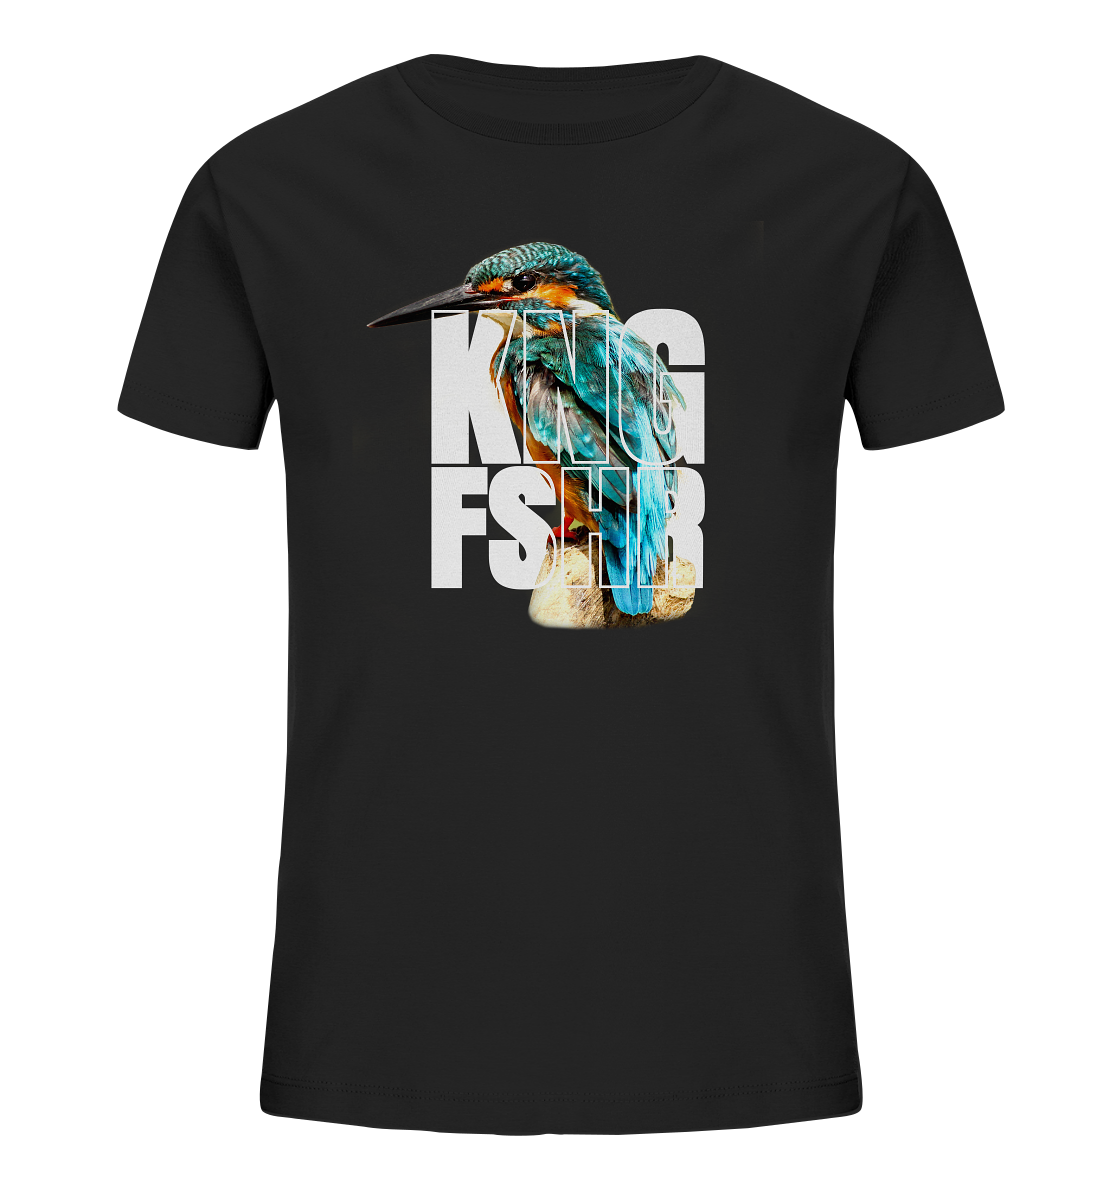 KING FISHER - Kinder Bio T-Shirt